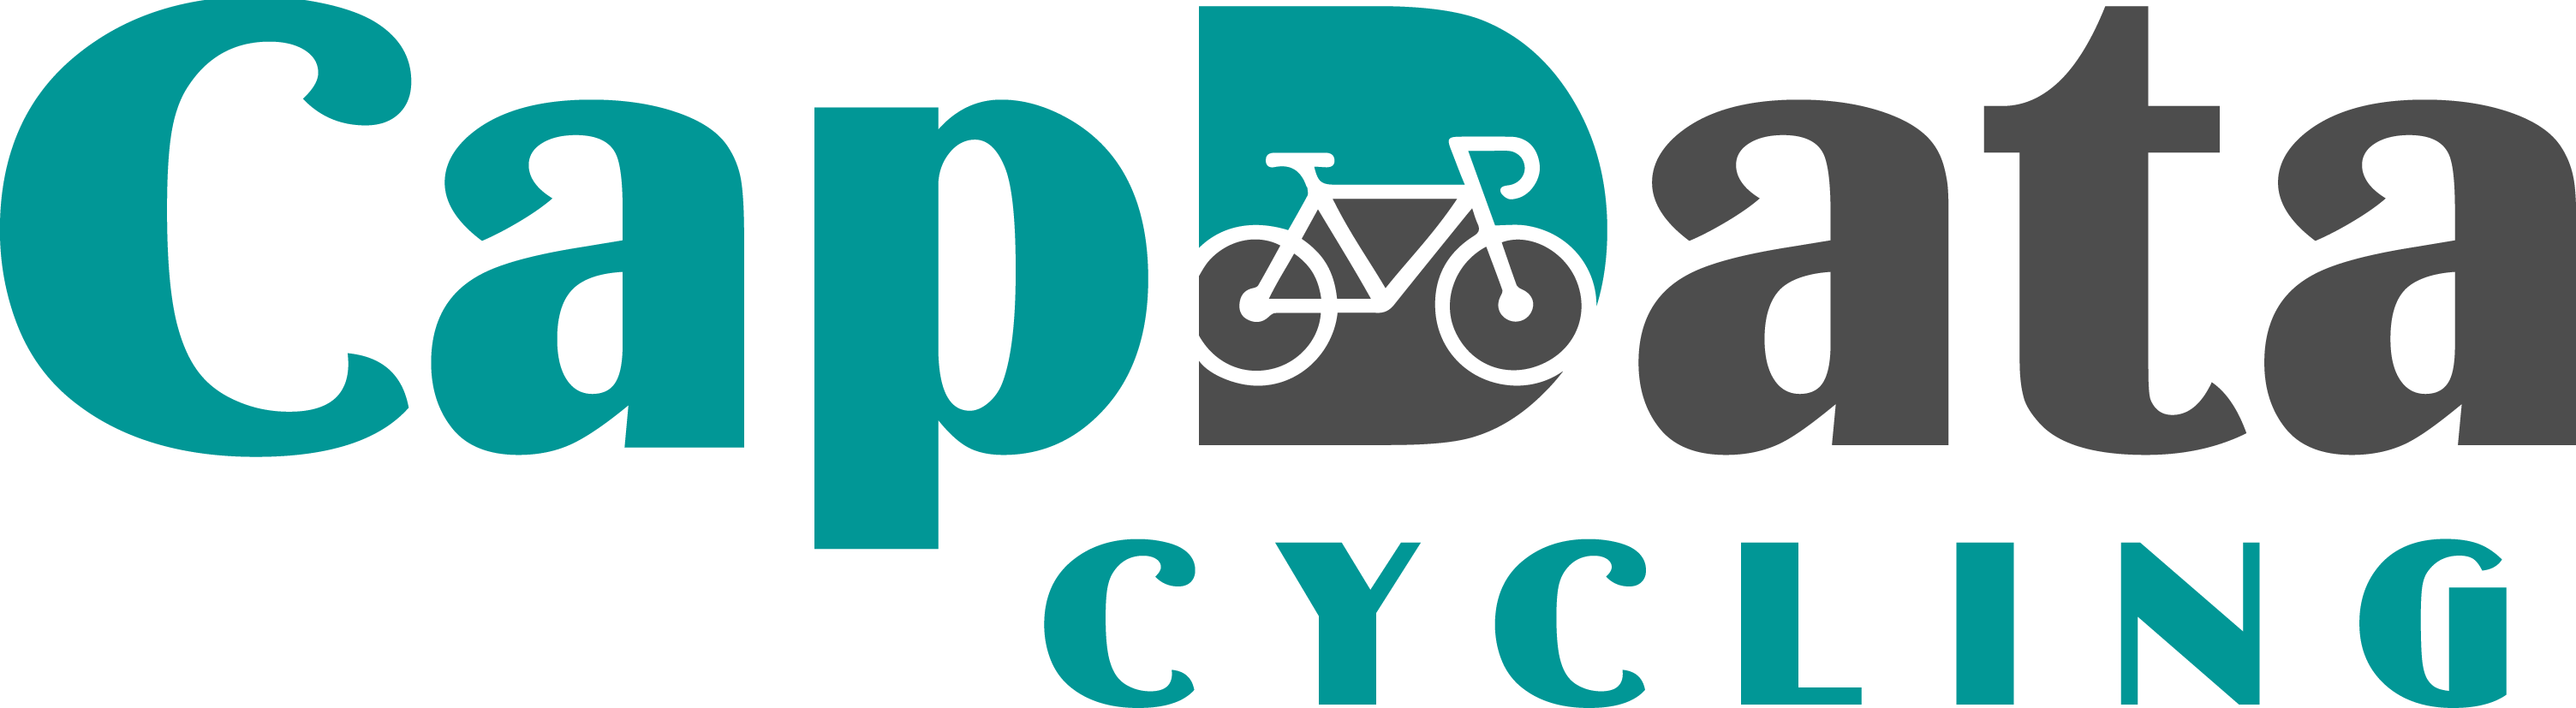 CapData Cycling